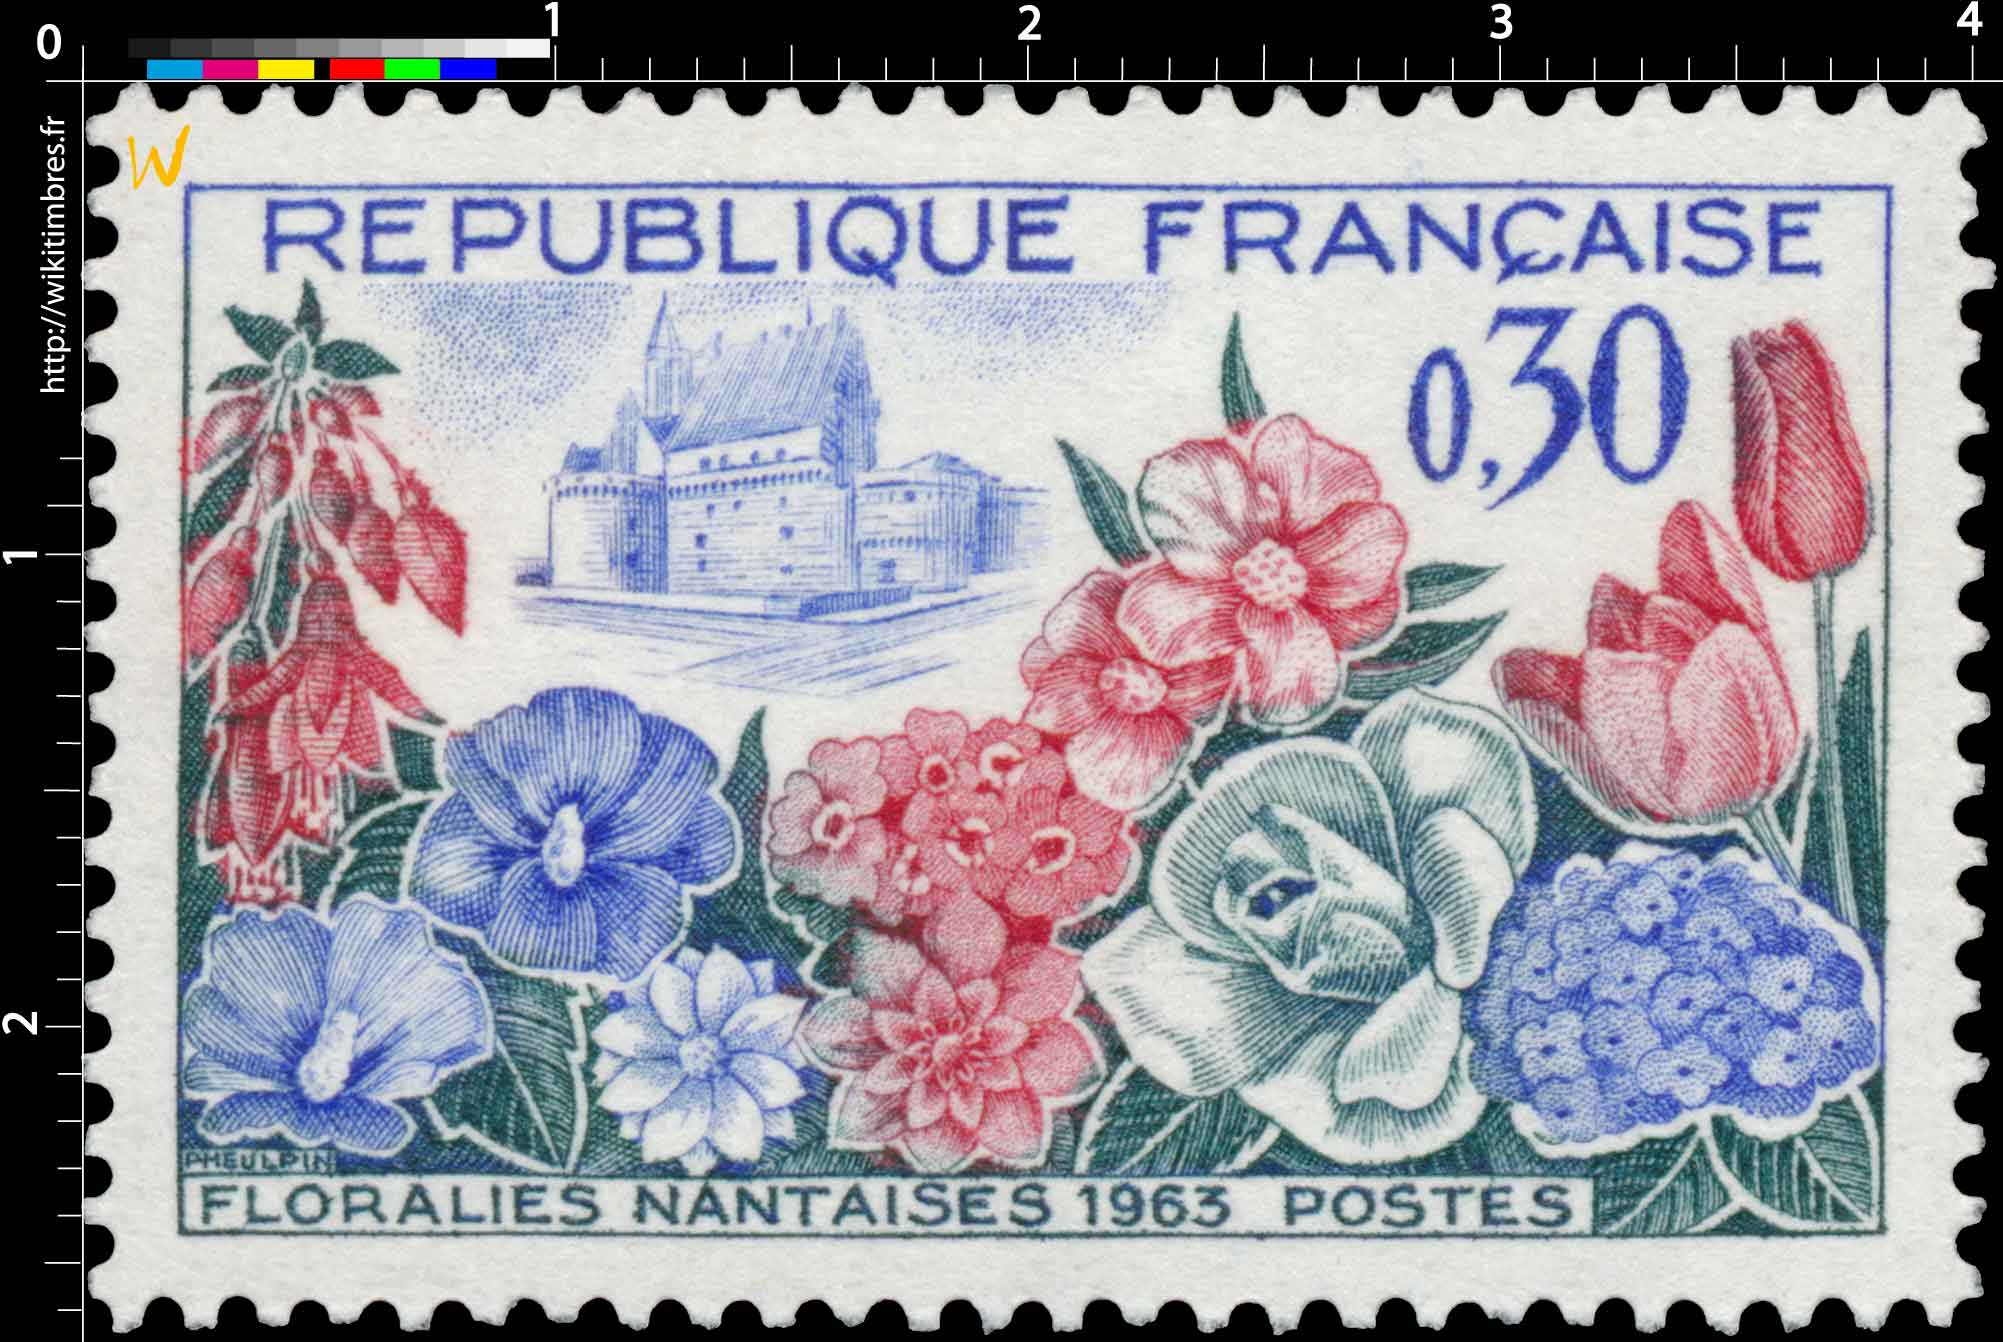 1963 FLORALIES NANTAISES